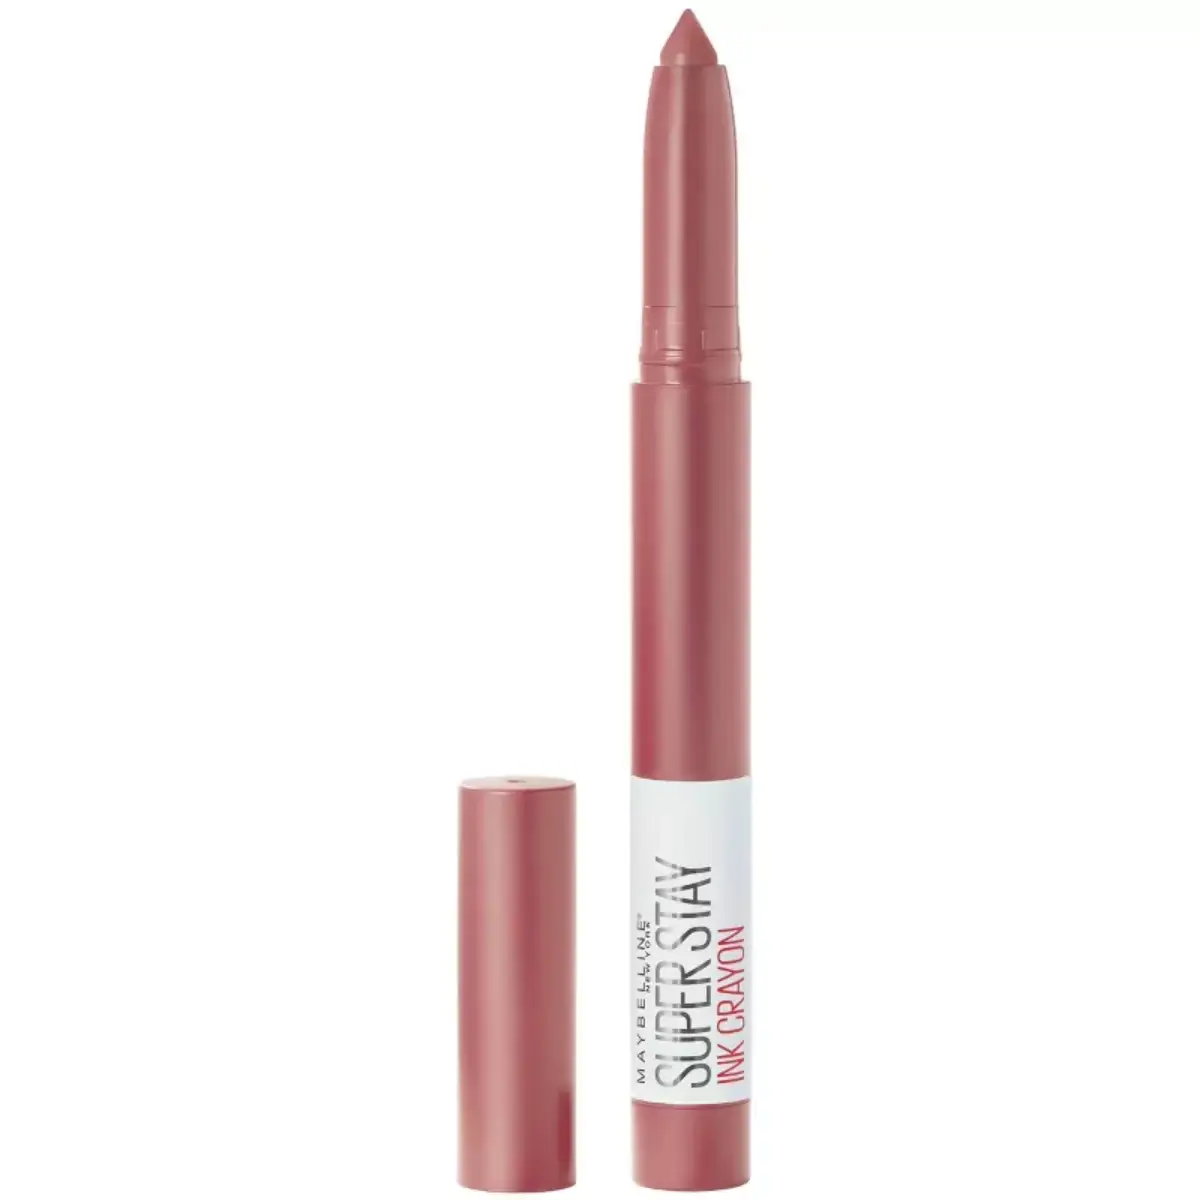 Bite beauty lip crayon dupe vs maybelline superstay lipstick target